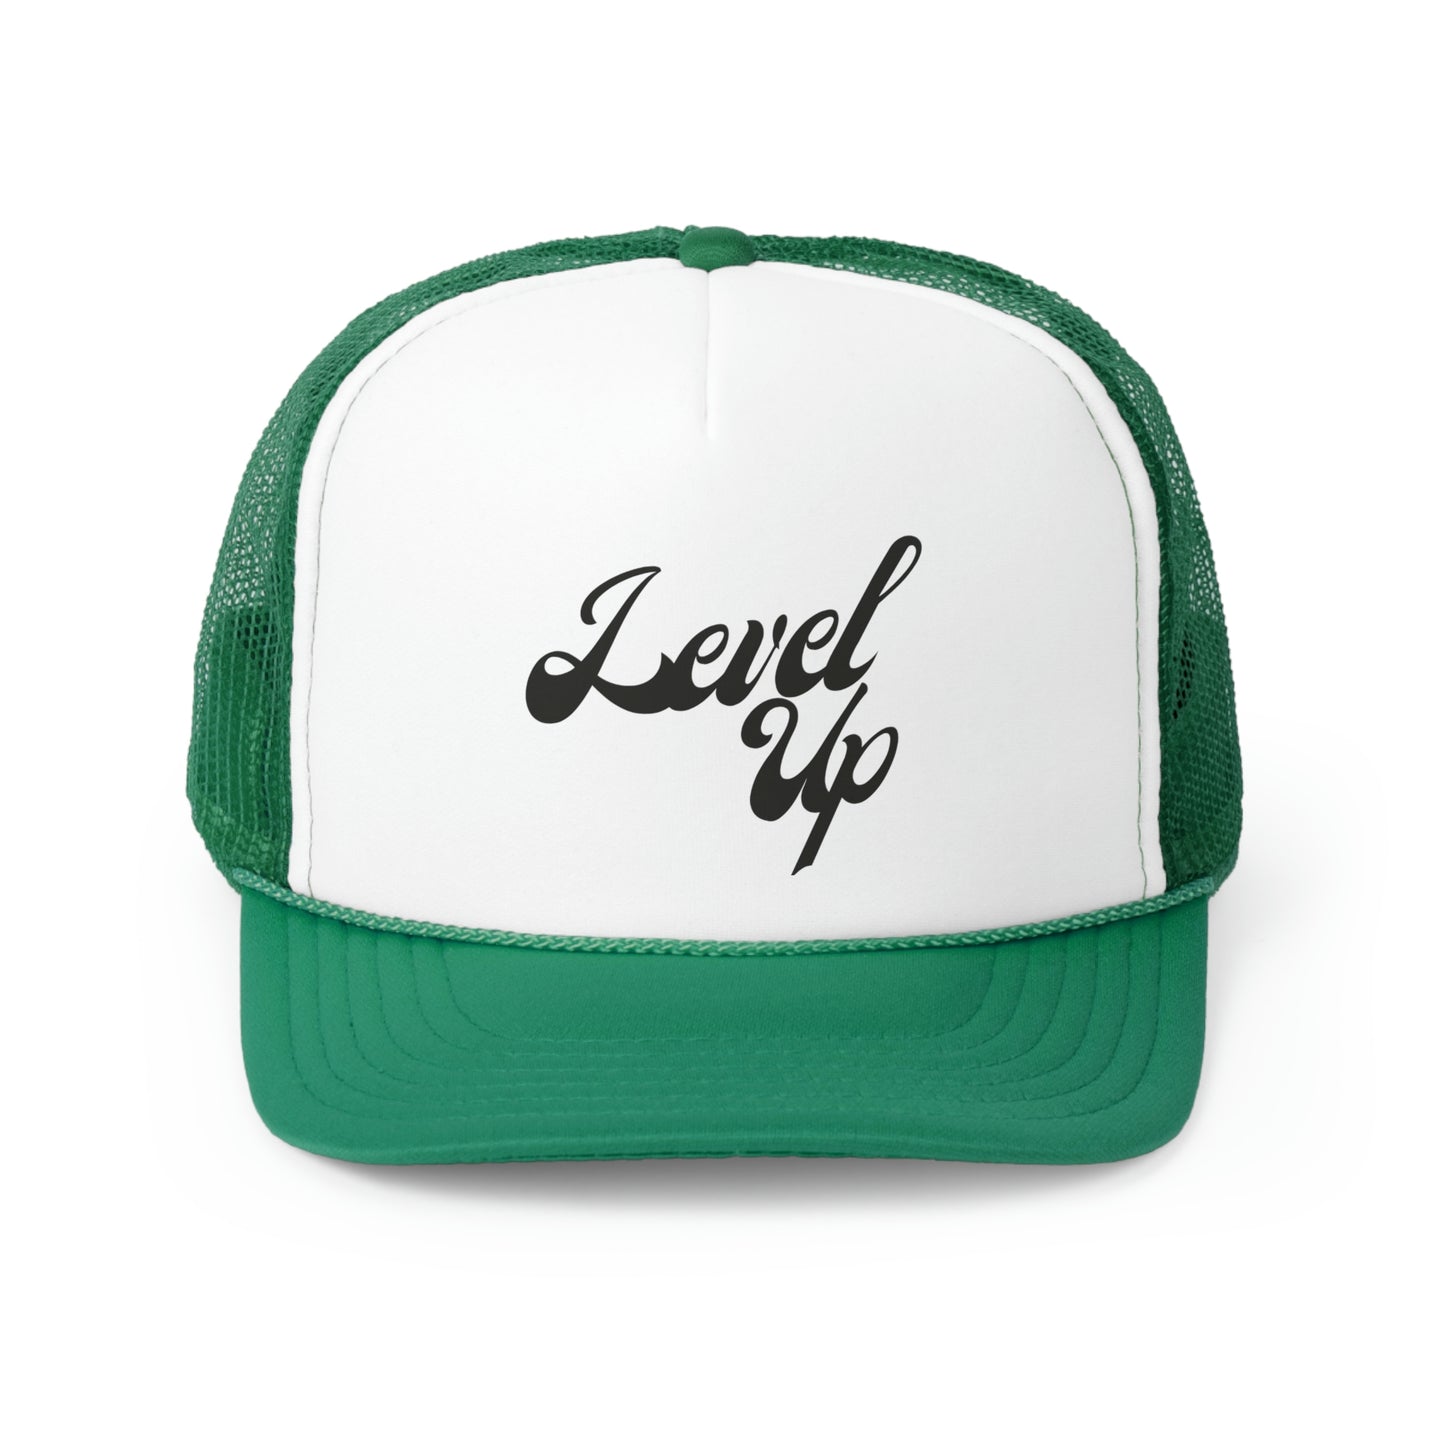 Level Up Trucker Hat